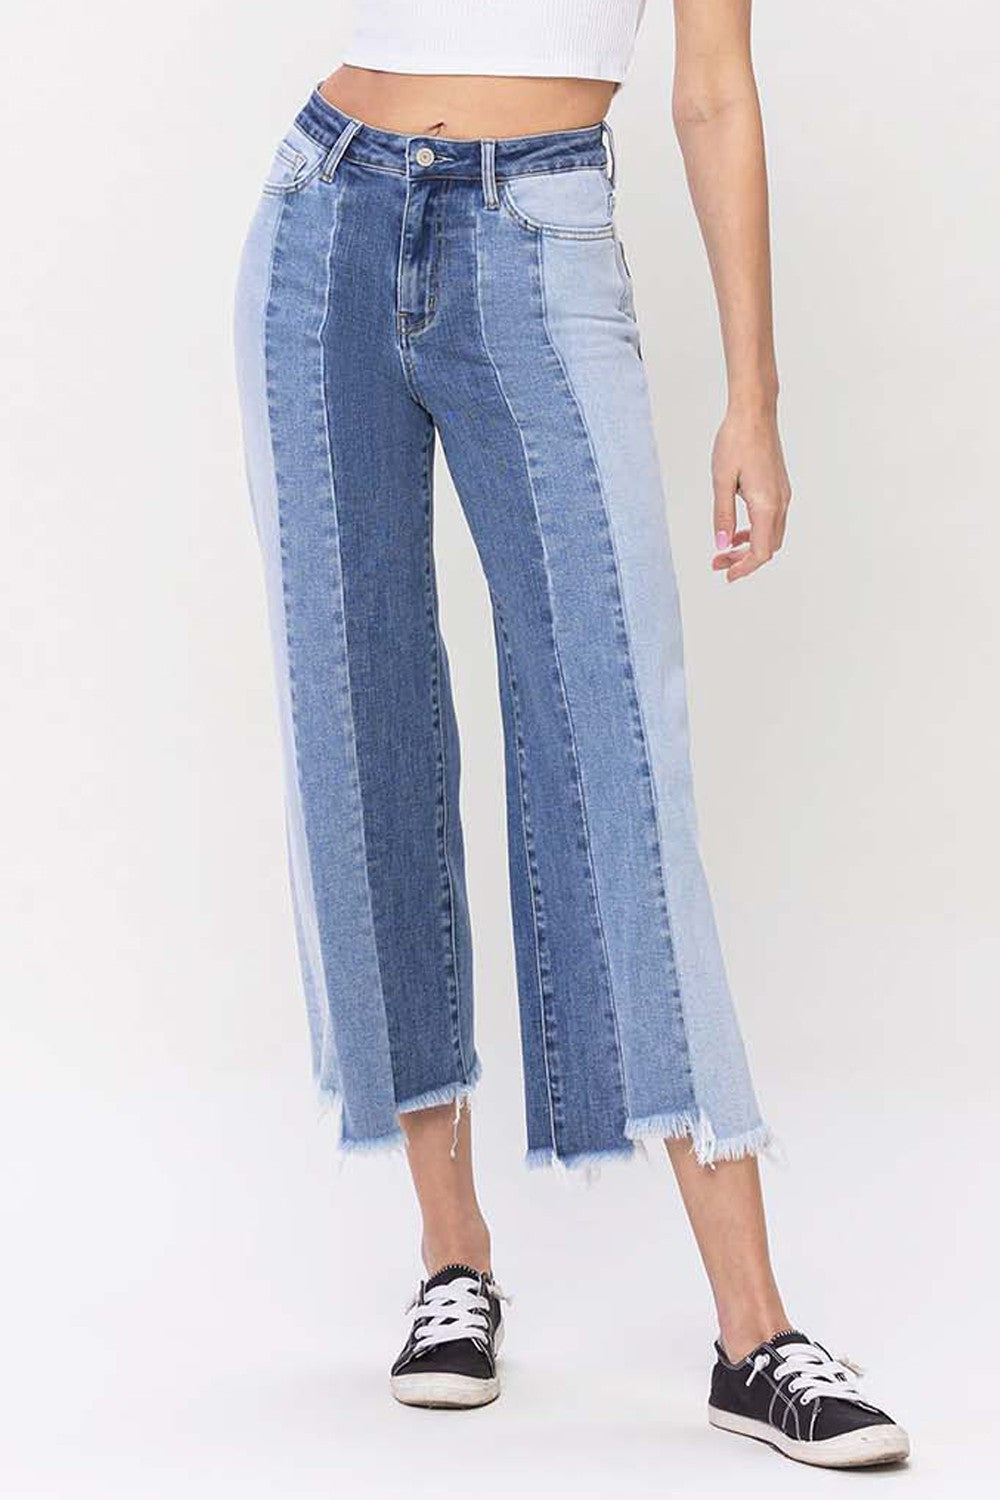 Riley Striped Denim Jeans